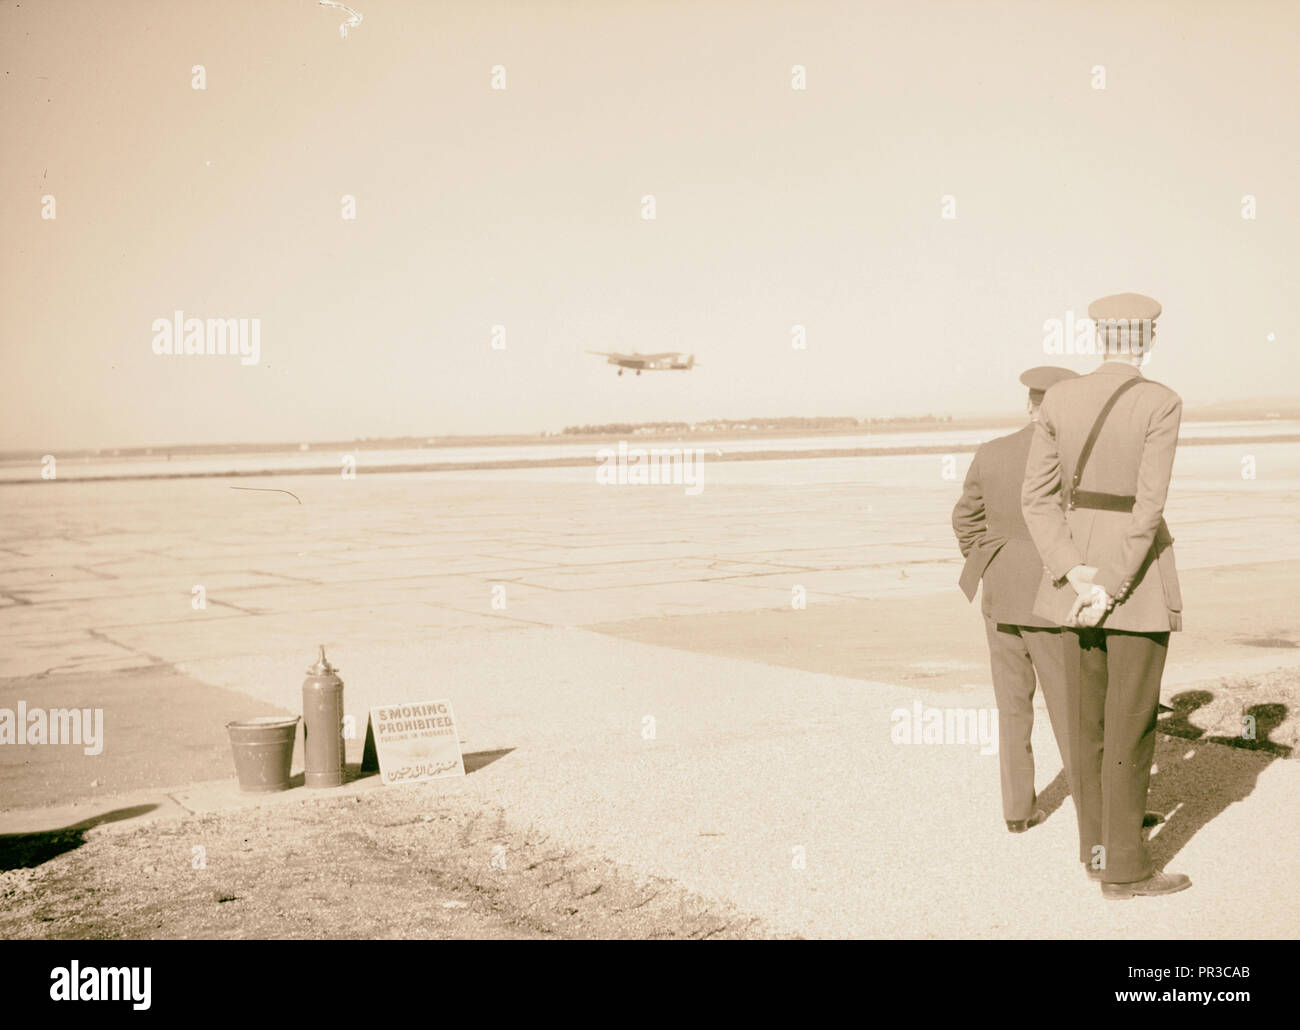 Arrival in Palestine of Mr. Antony [i.e., Anthony] Eden. Plane taken off. 1940 Stock Photo